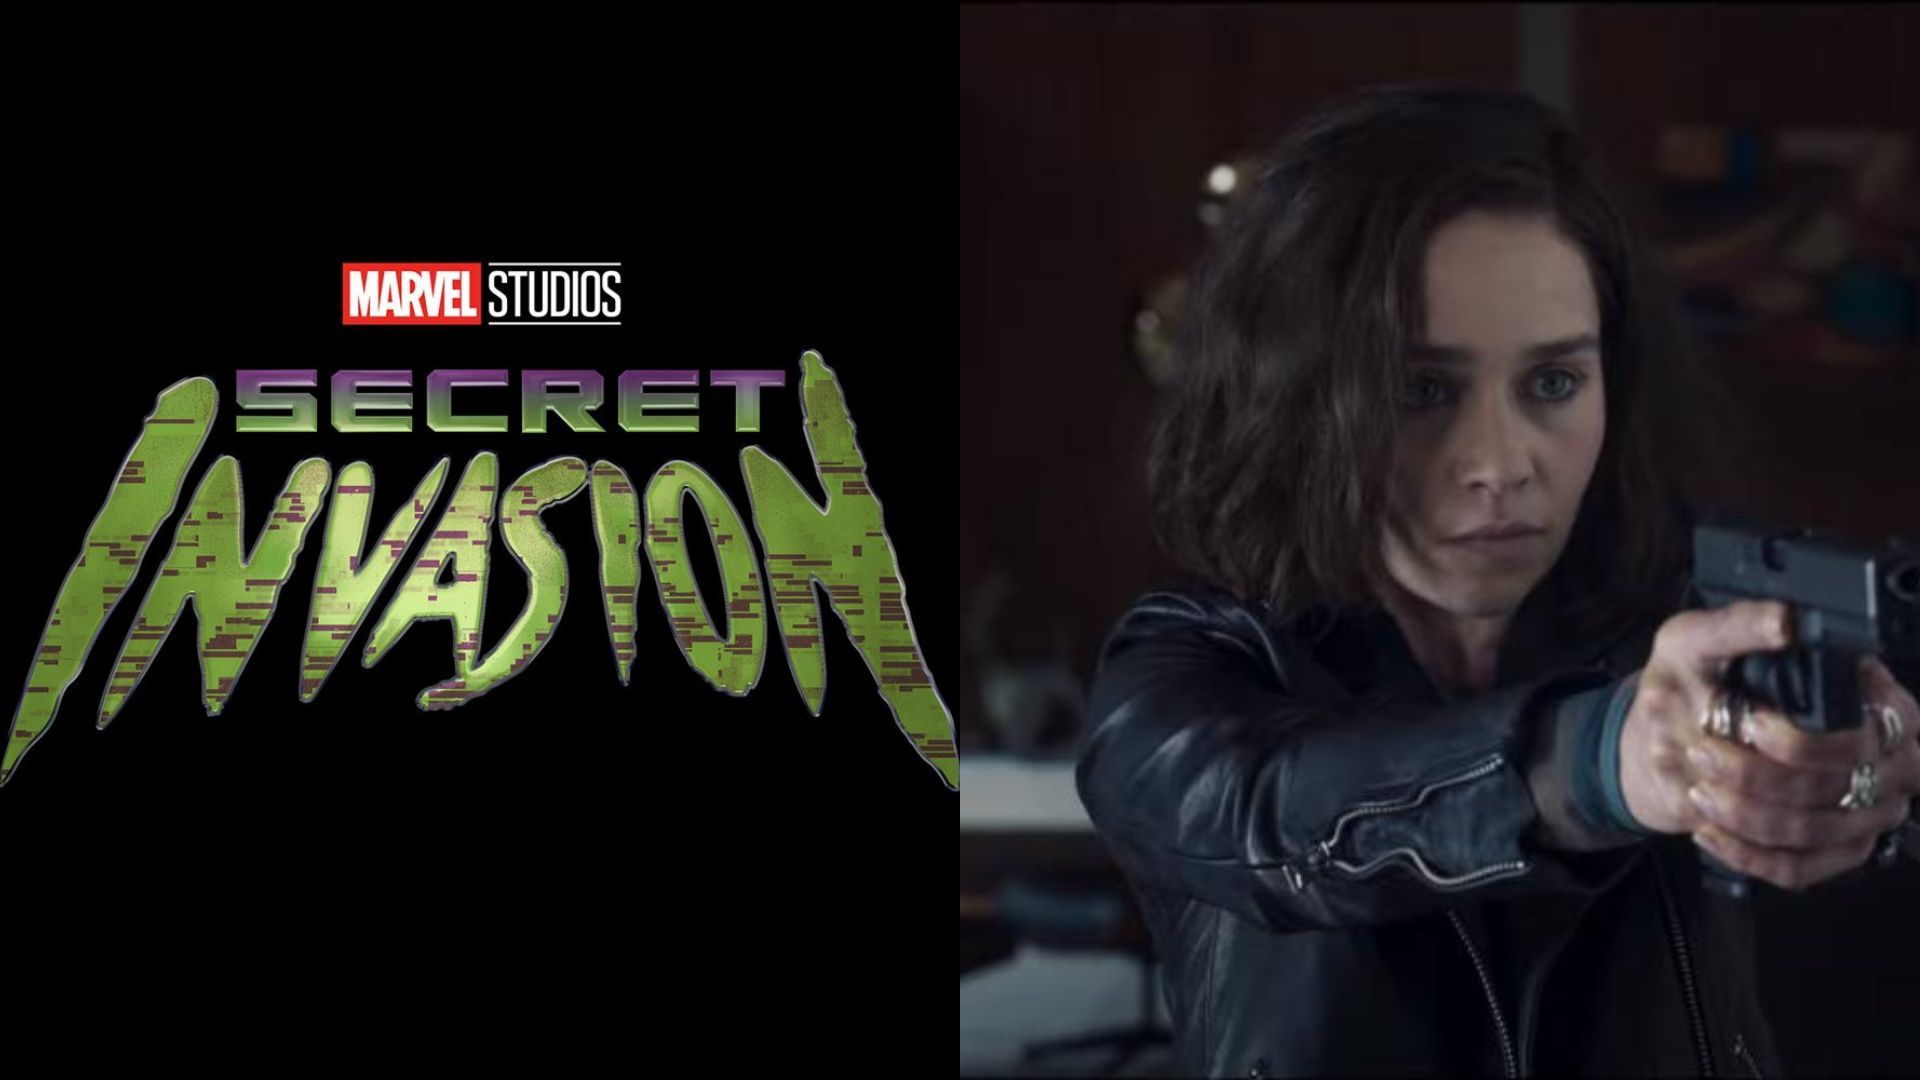 Marvel's Secret Invasion Release Date, Trailer, Cast & More